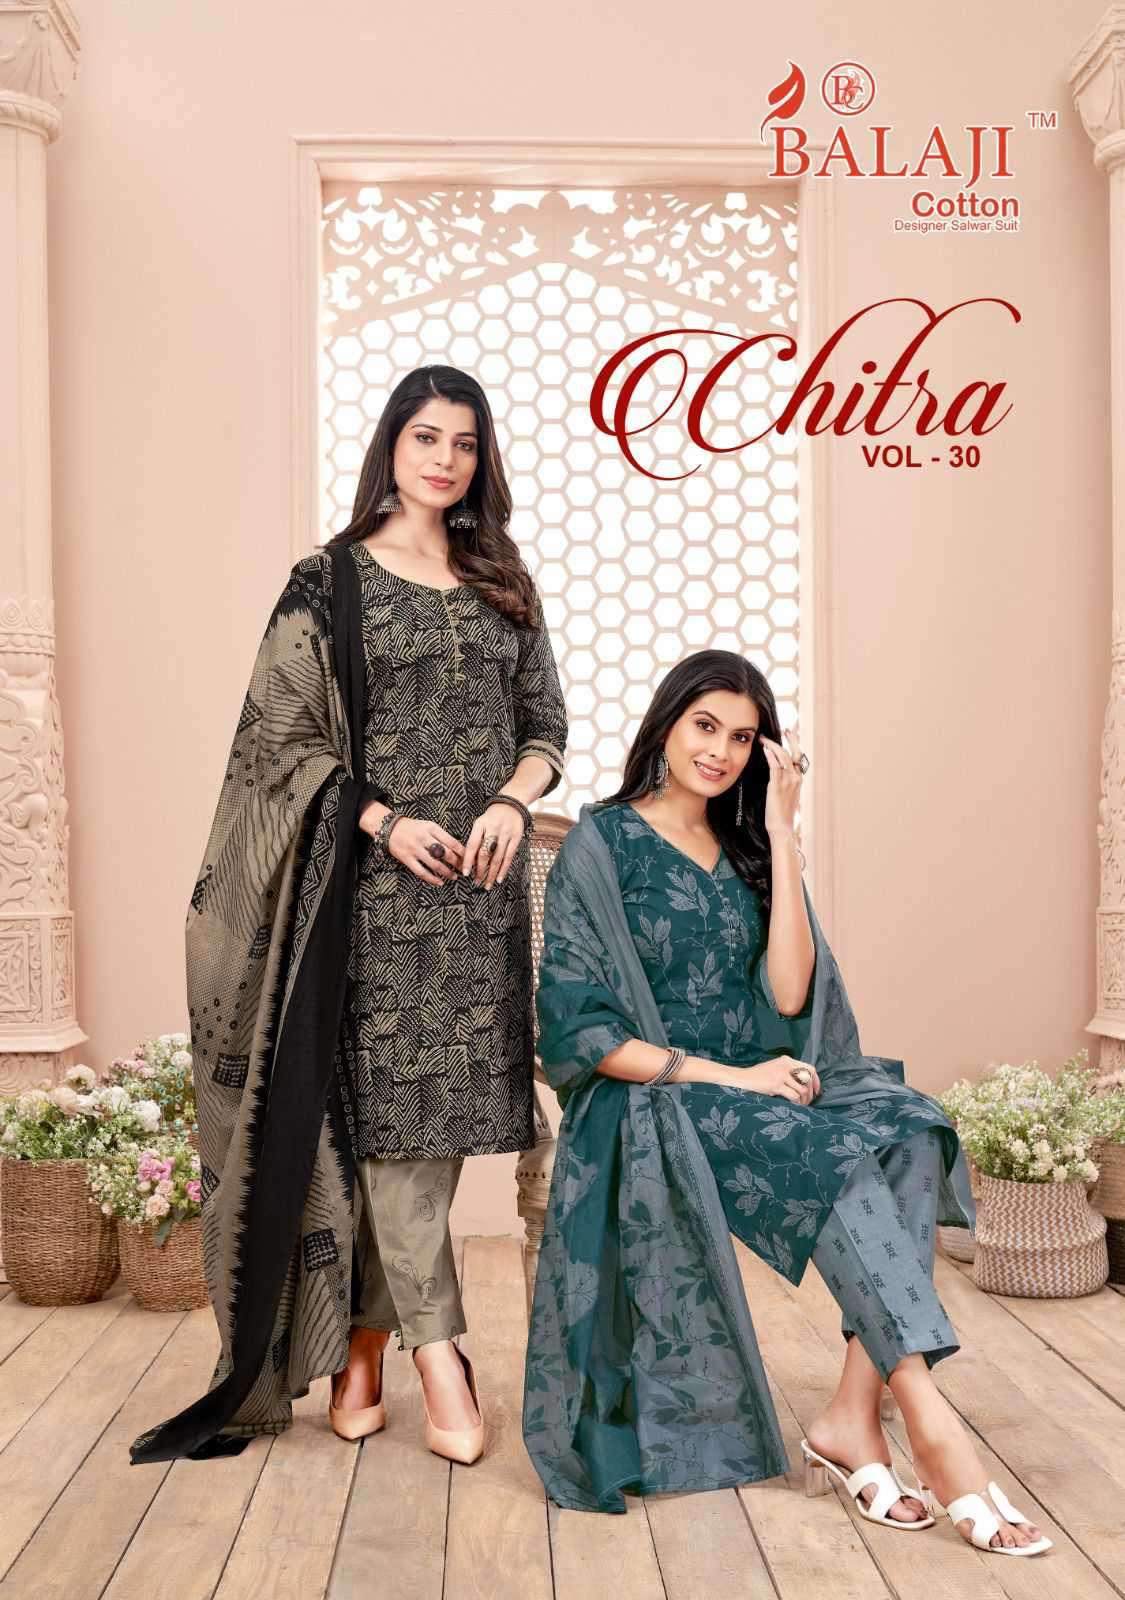 Balaji Cotton Chitra Vol 30 Fancy Printed Cotton Dress Supplier New Catalog